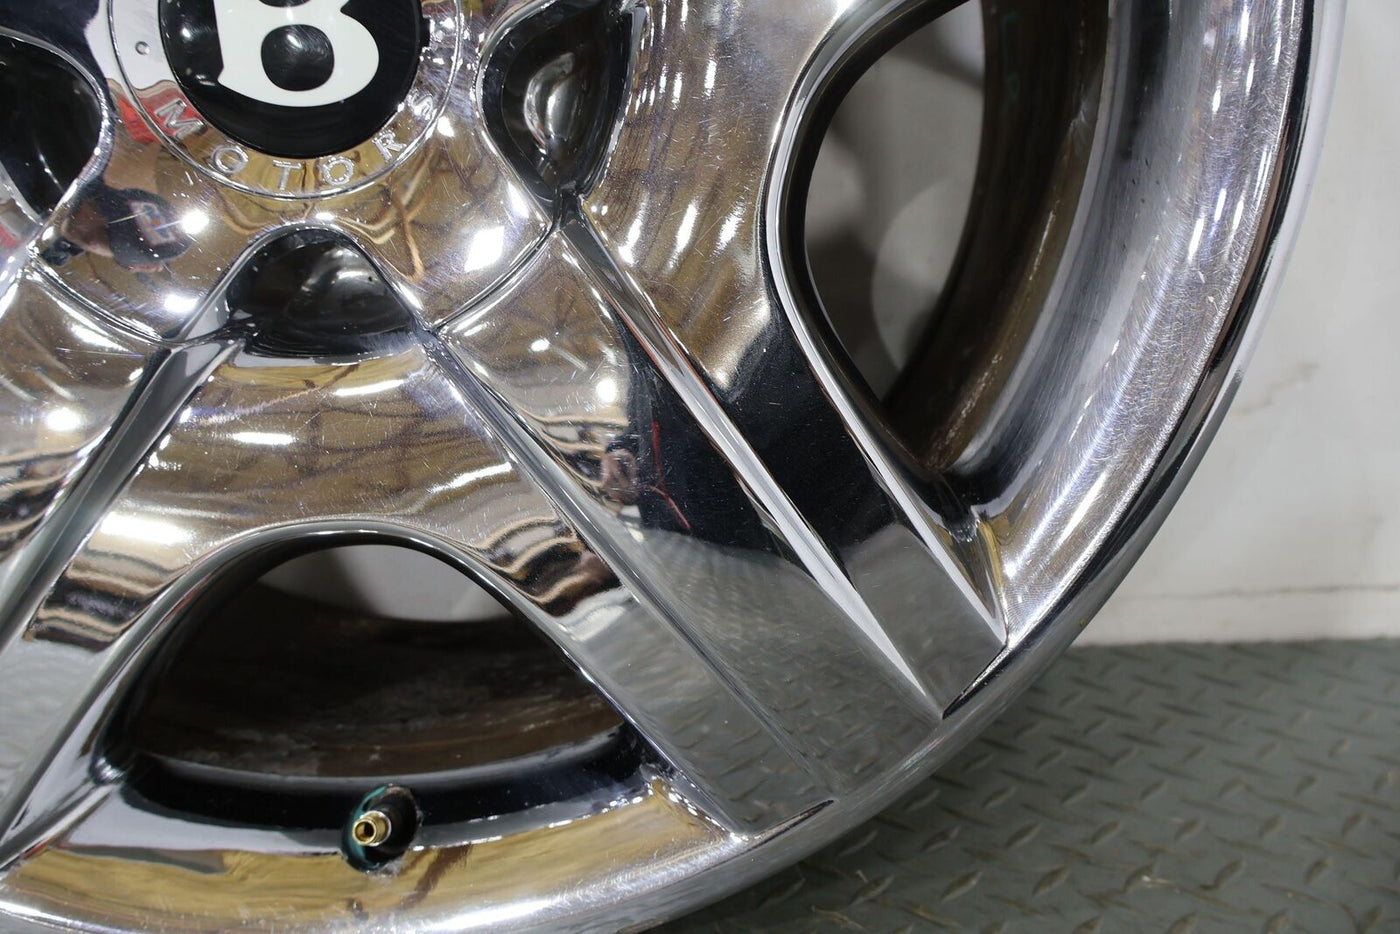 05-09 Bentley Continental GT 19X9 OEM Wheel (Chrome) W/ Center Cap (Curb Marks)